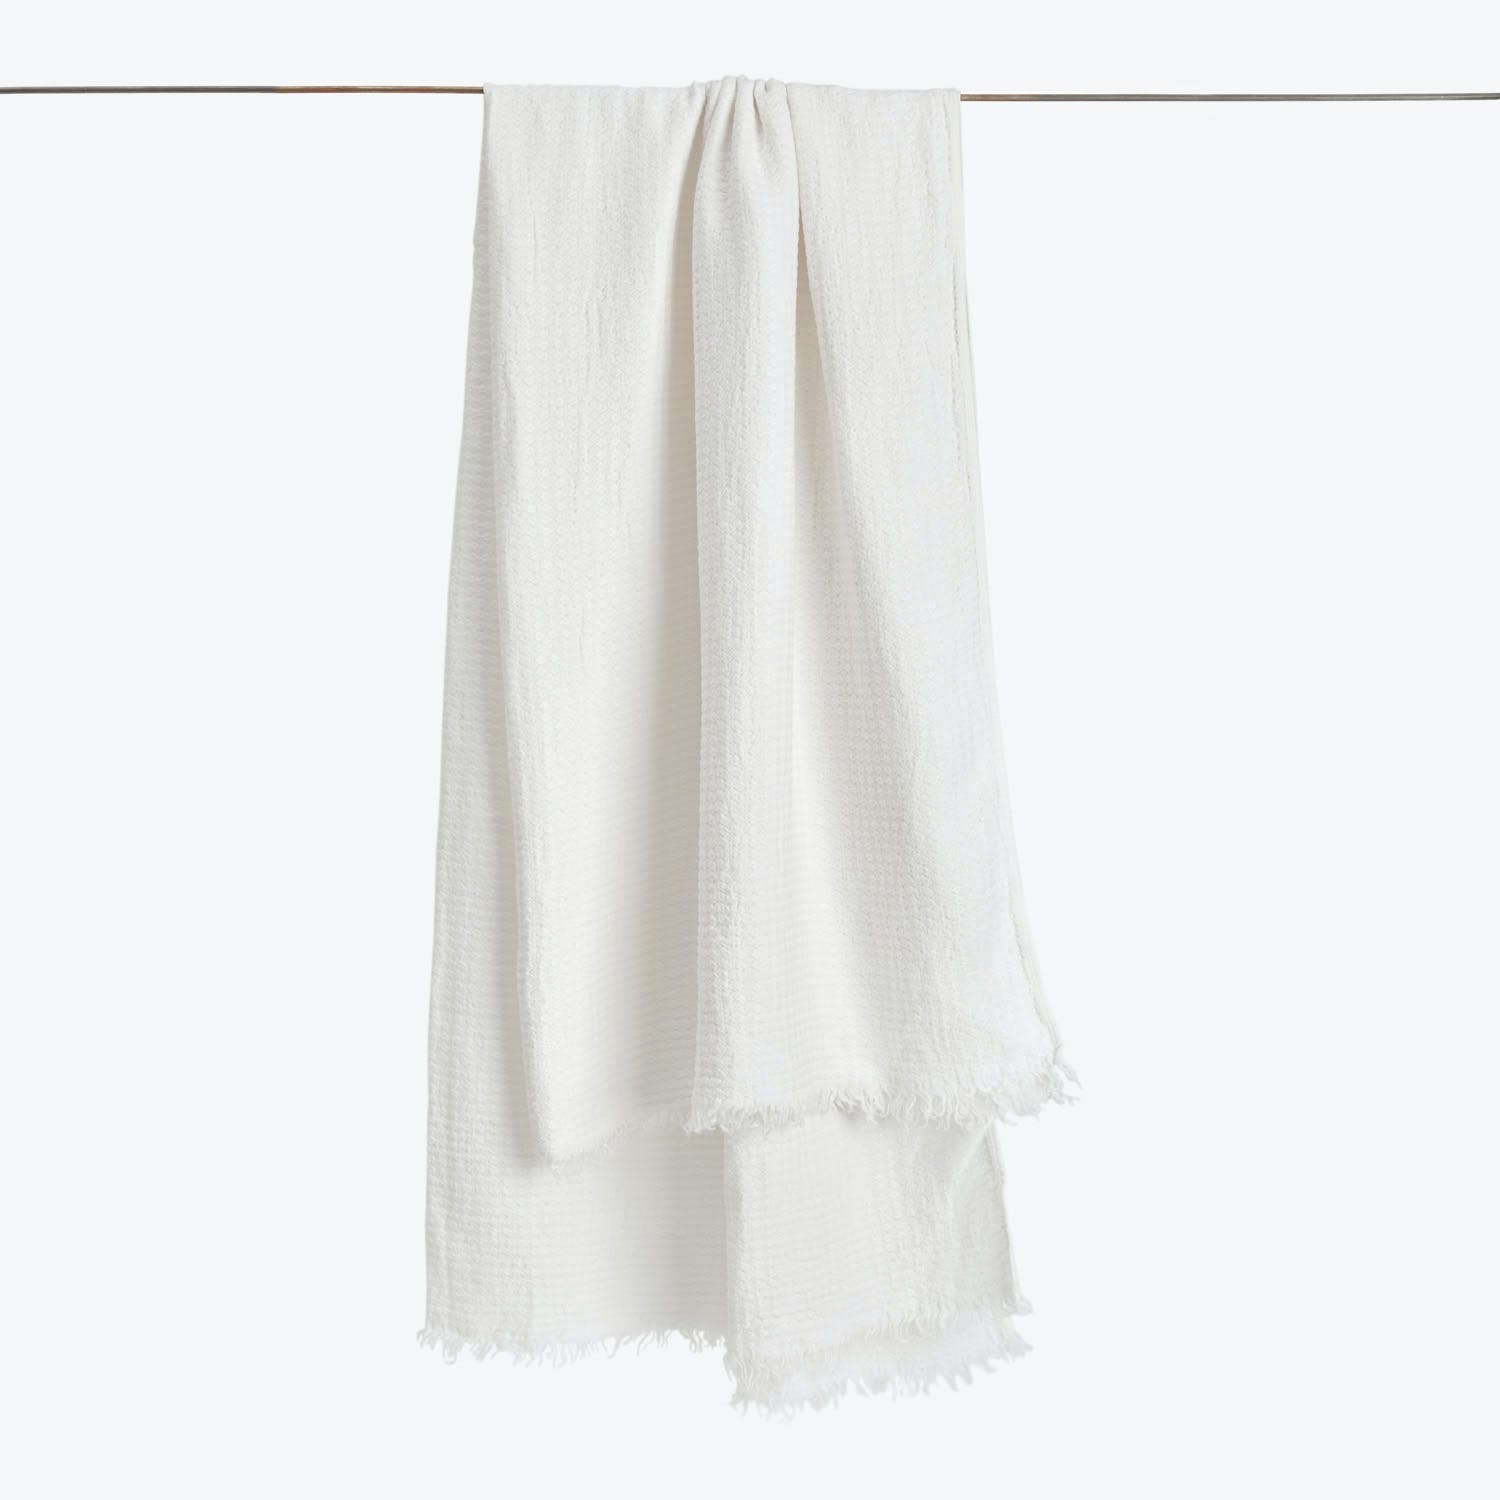 White textured towel with fringe hanging on straight horizontal rod.